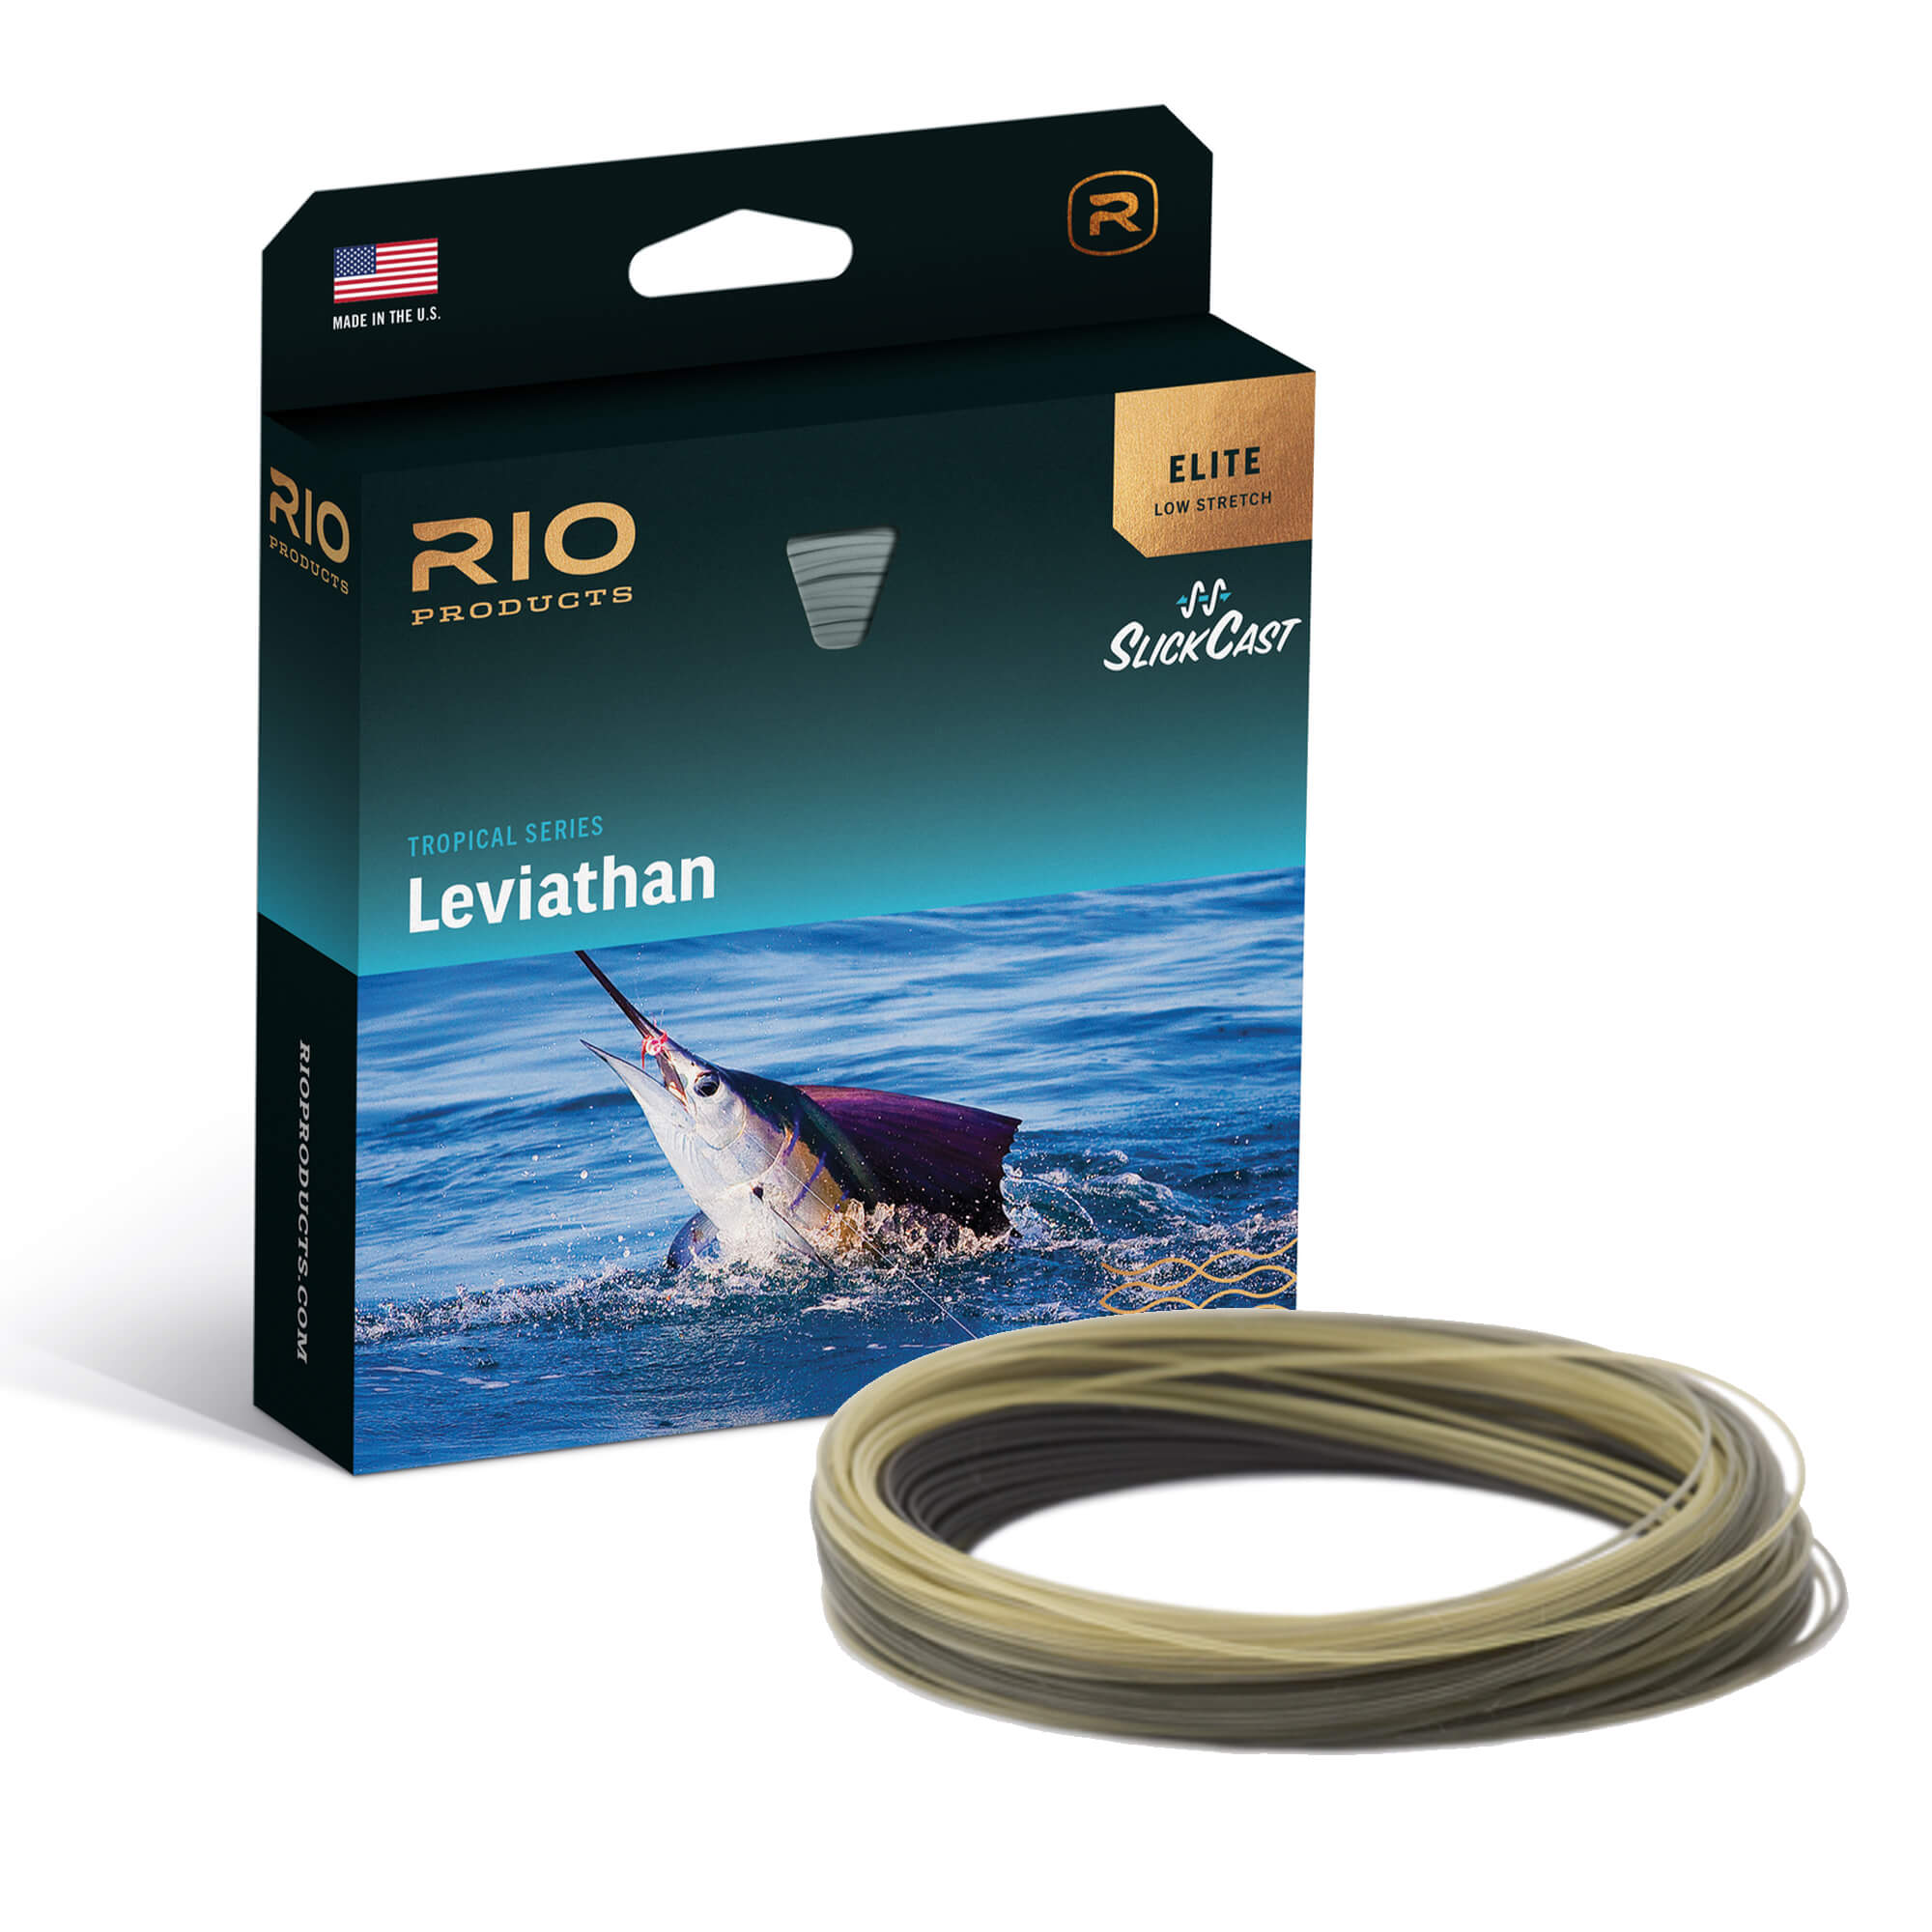 RIO Elite Leviathan Fly Line – Guide Flyfishing, Fly Fishing Rods, Reels, Sage, Redington, RIO